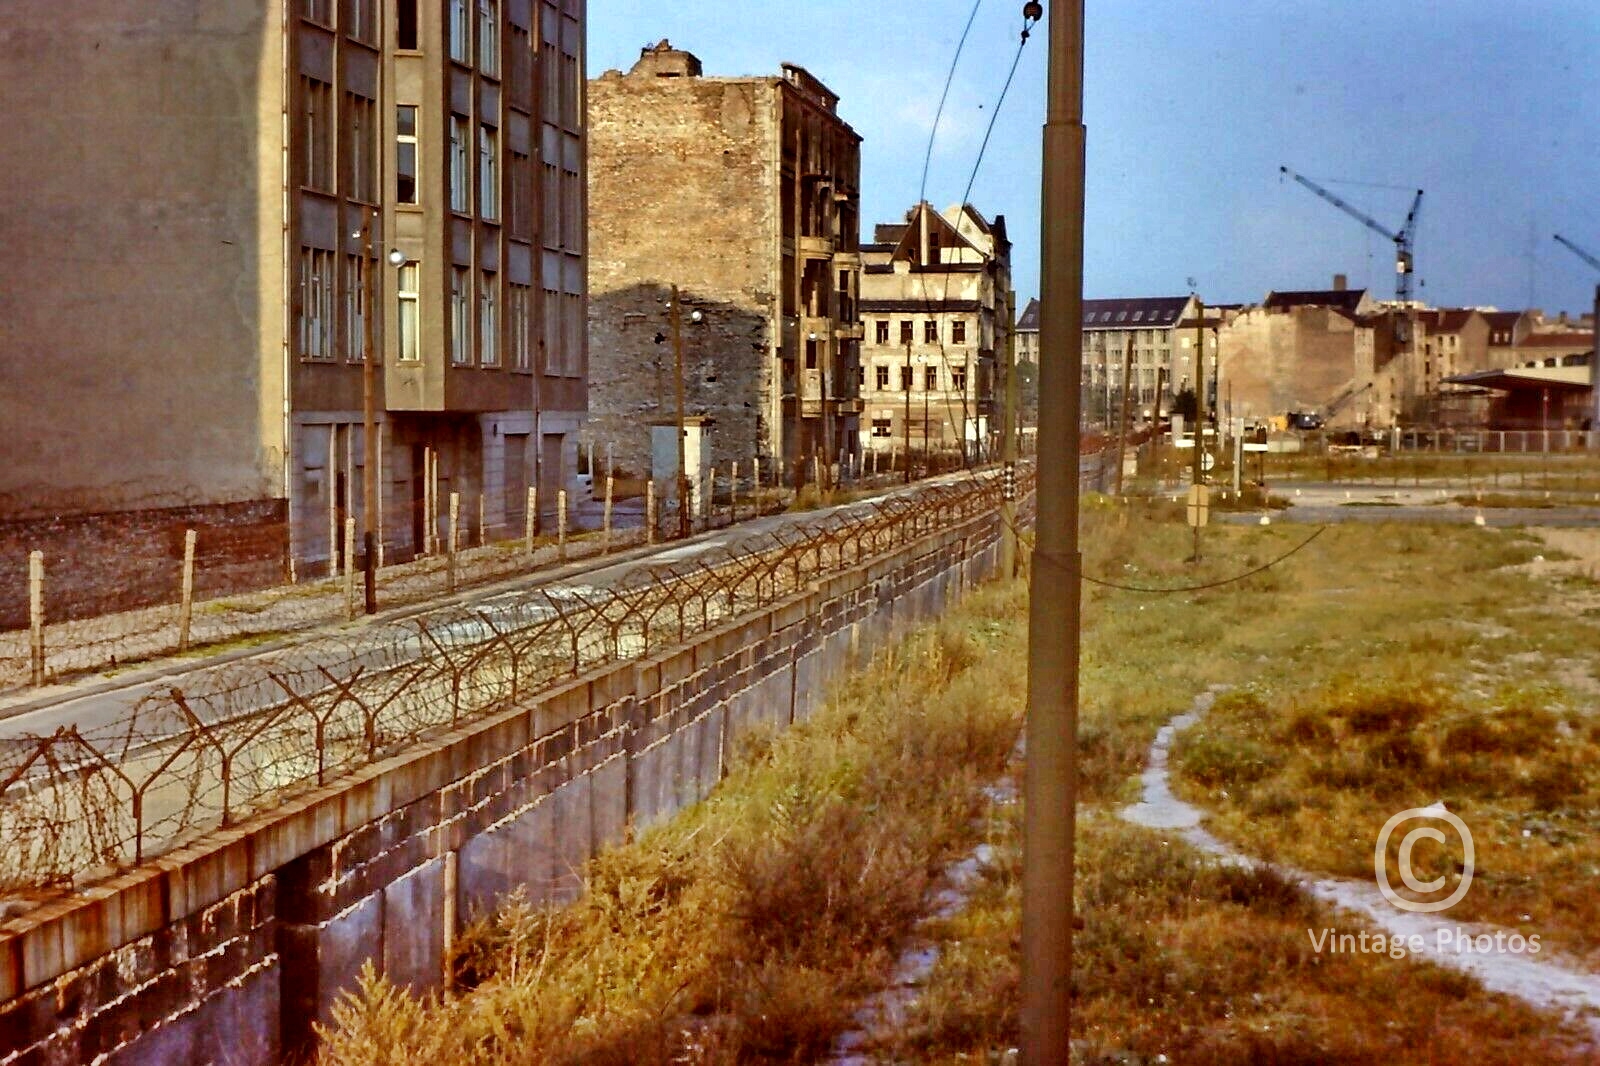 1960s German East West Border Wall